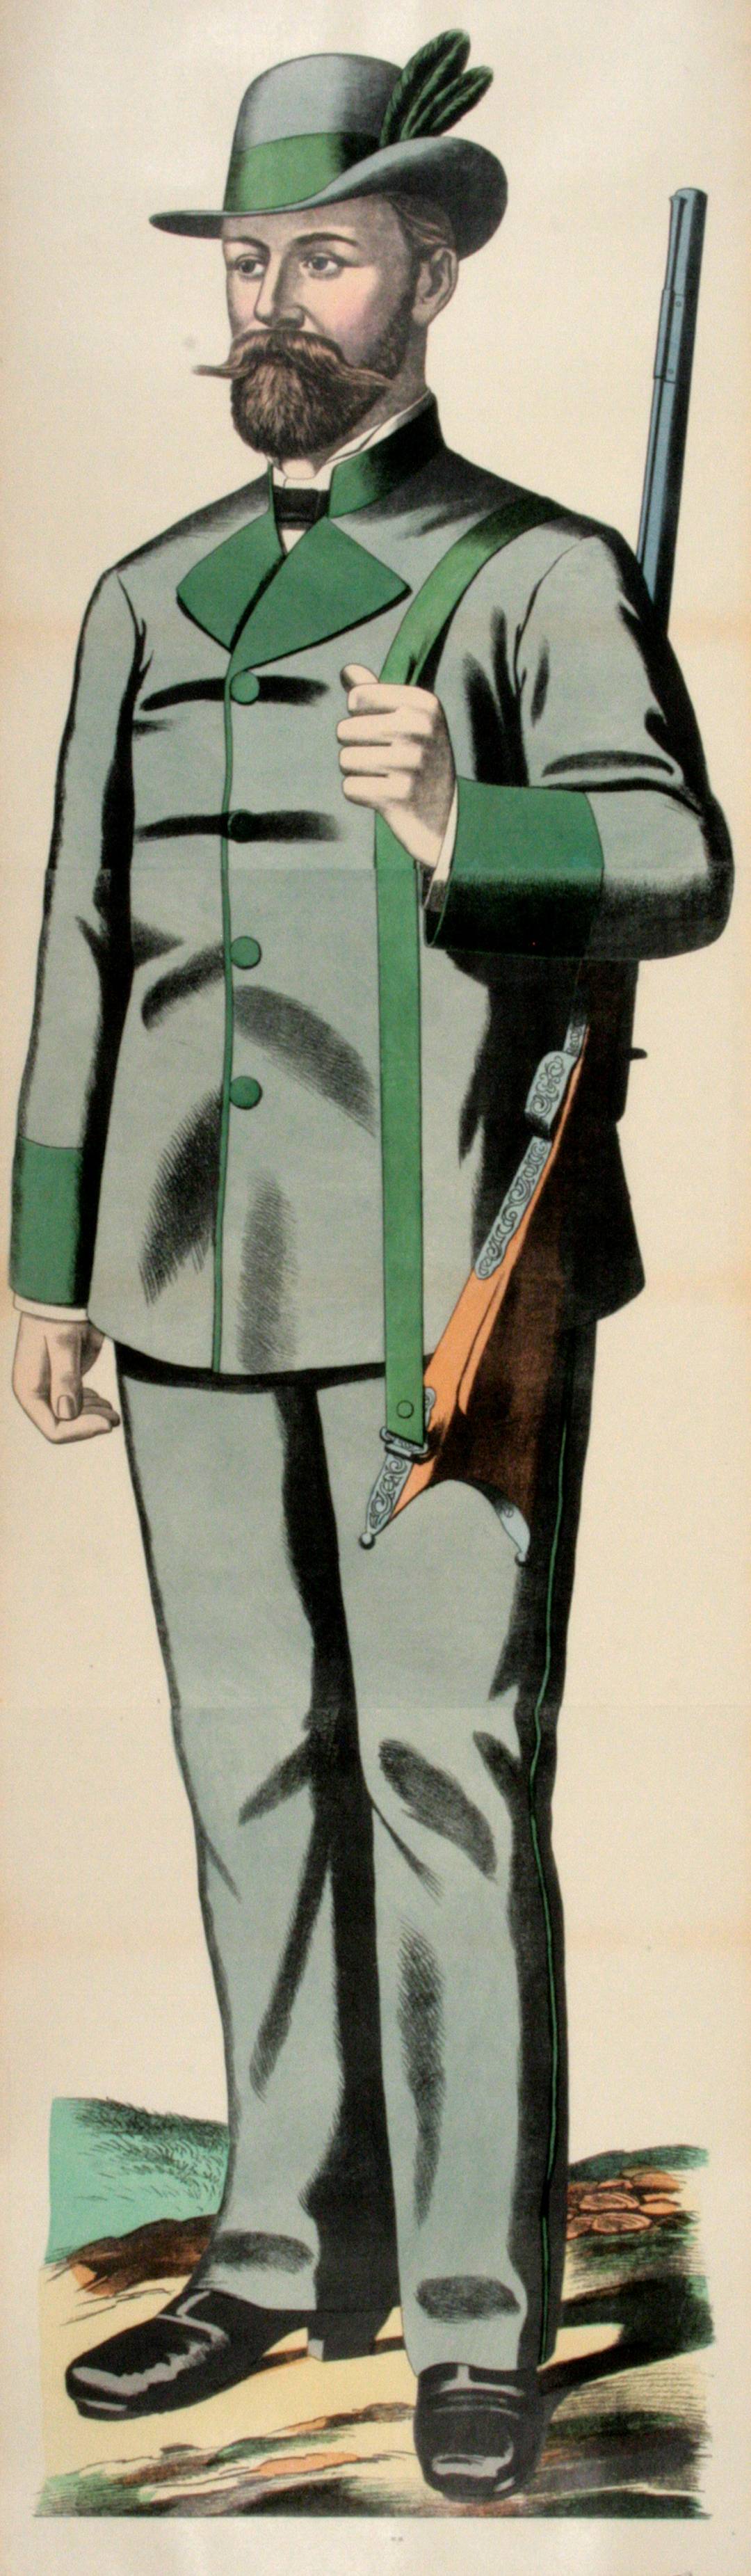 Original C1880 Vintage Poster - Gentleman Holding Rifle 38 - Wissembourg Collection